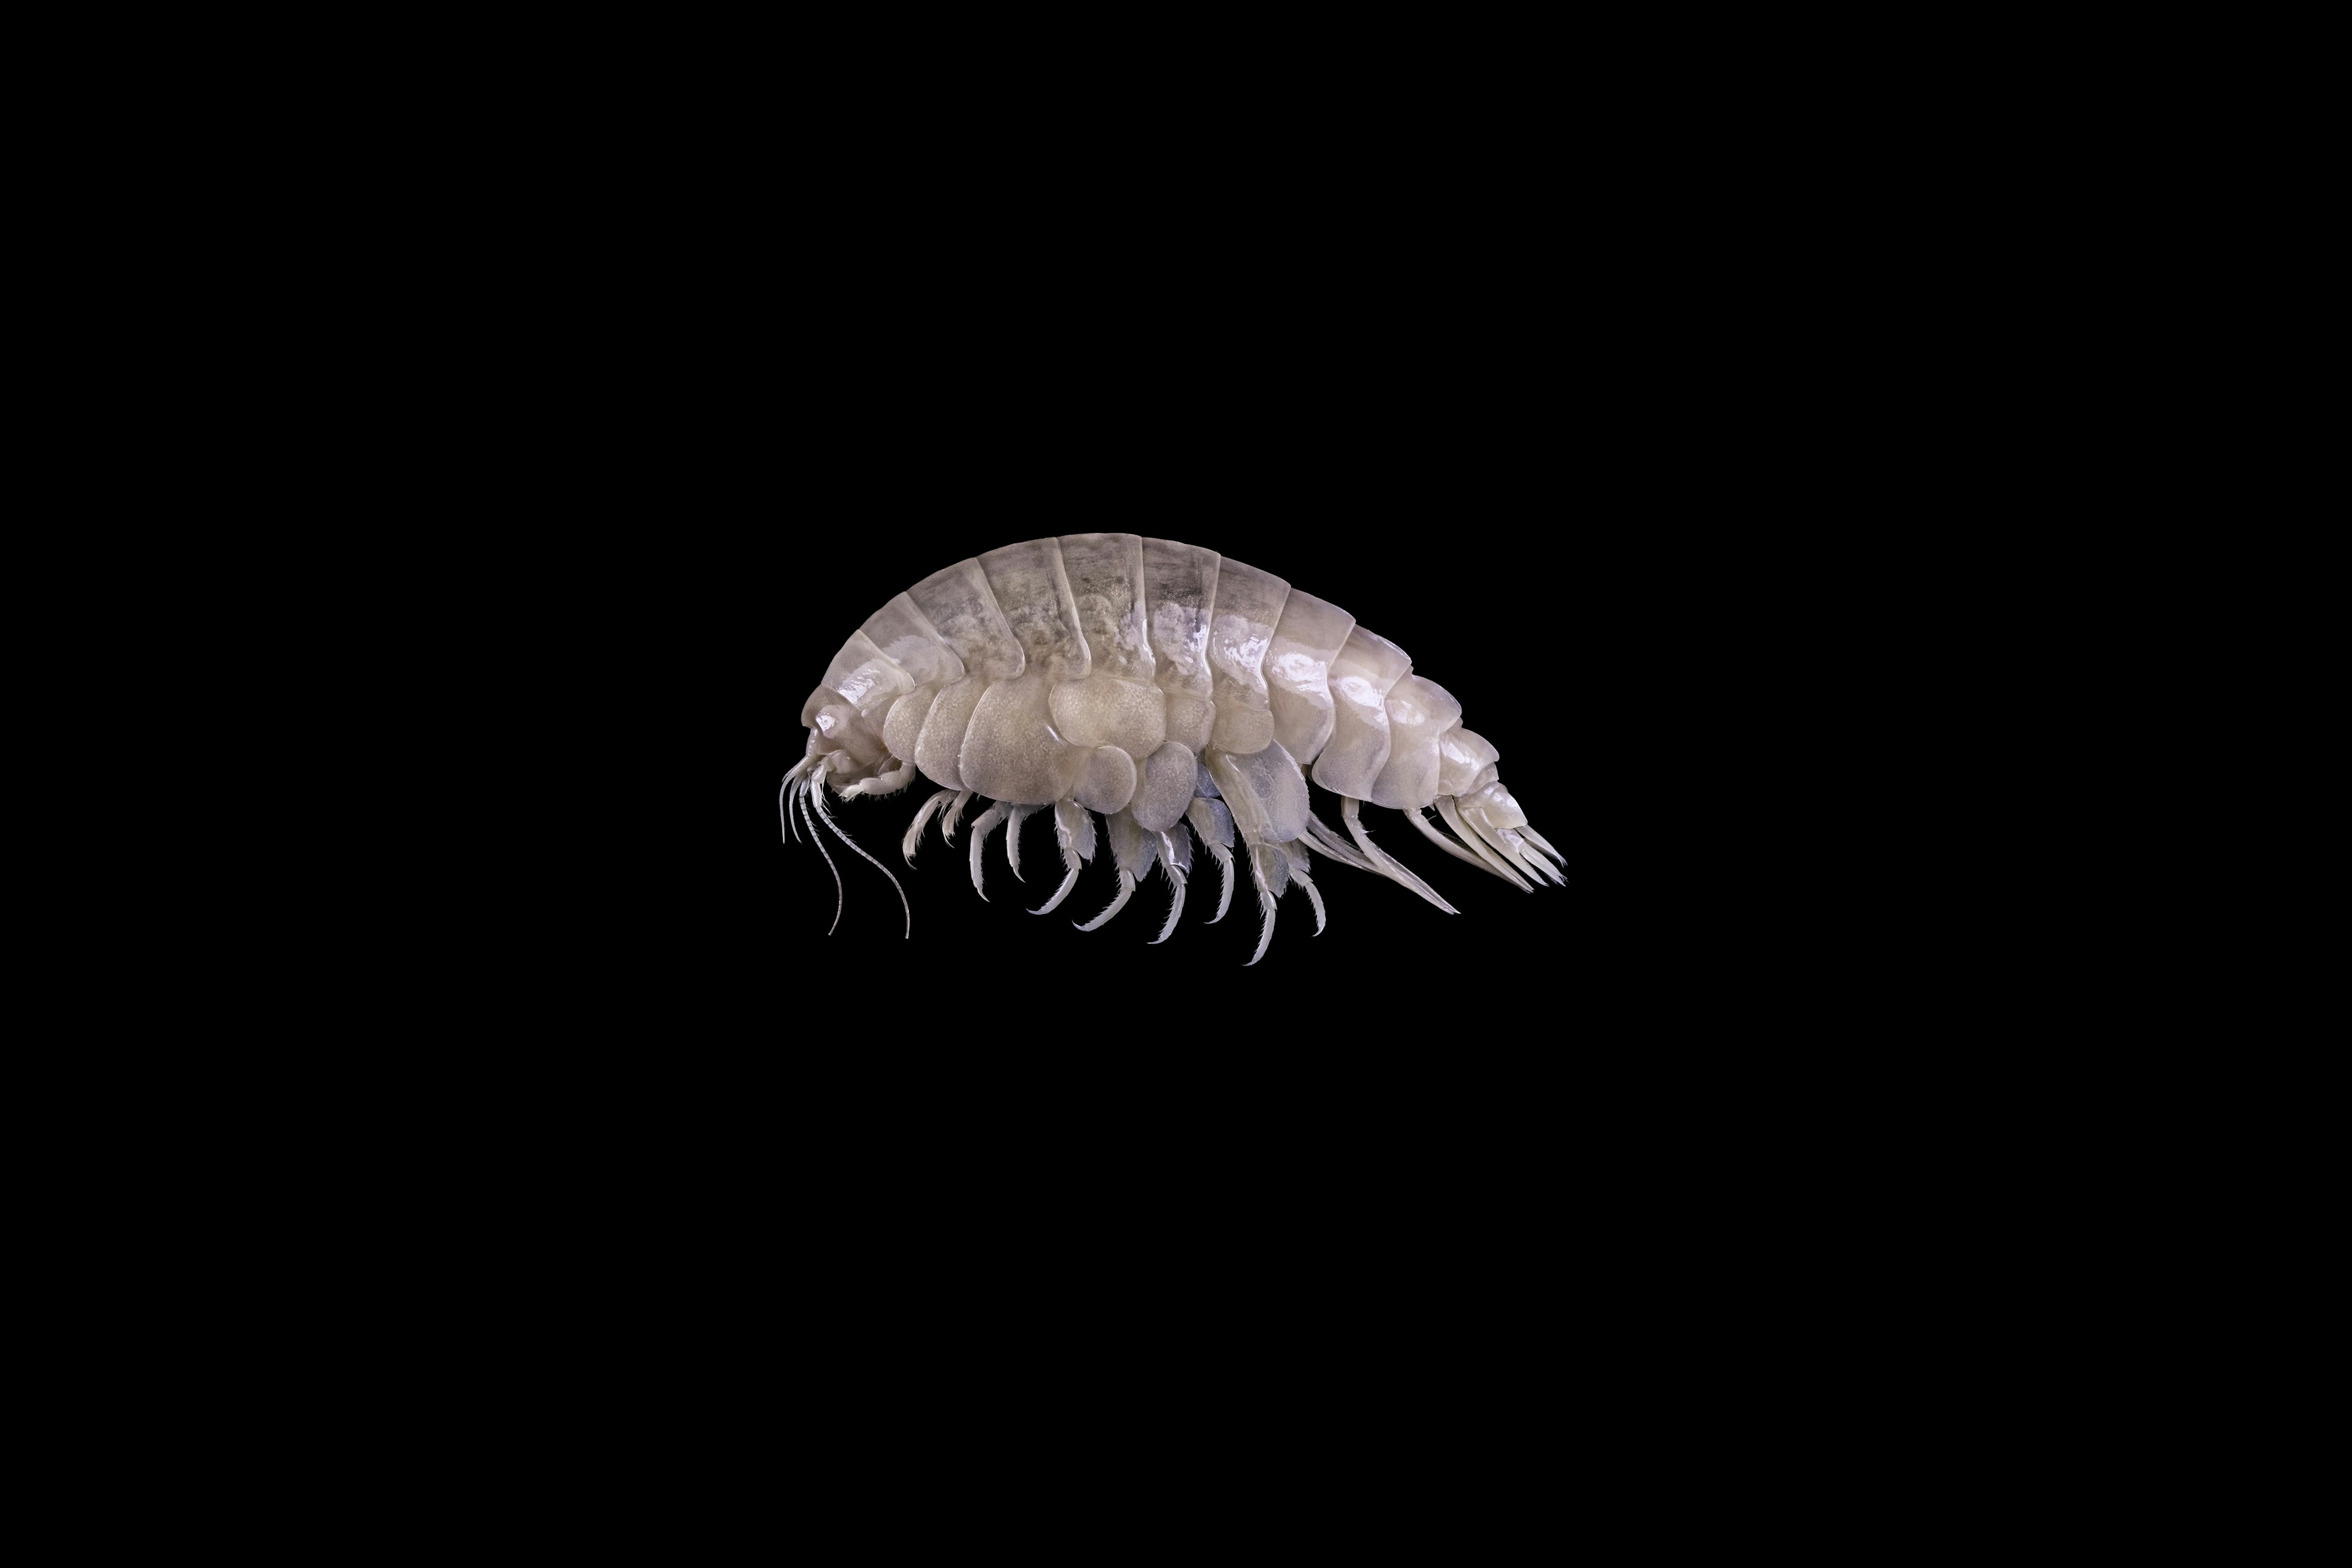 The amphipod Eurythenes plasticus, a small crustacean